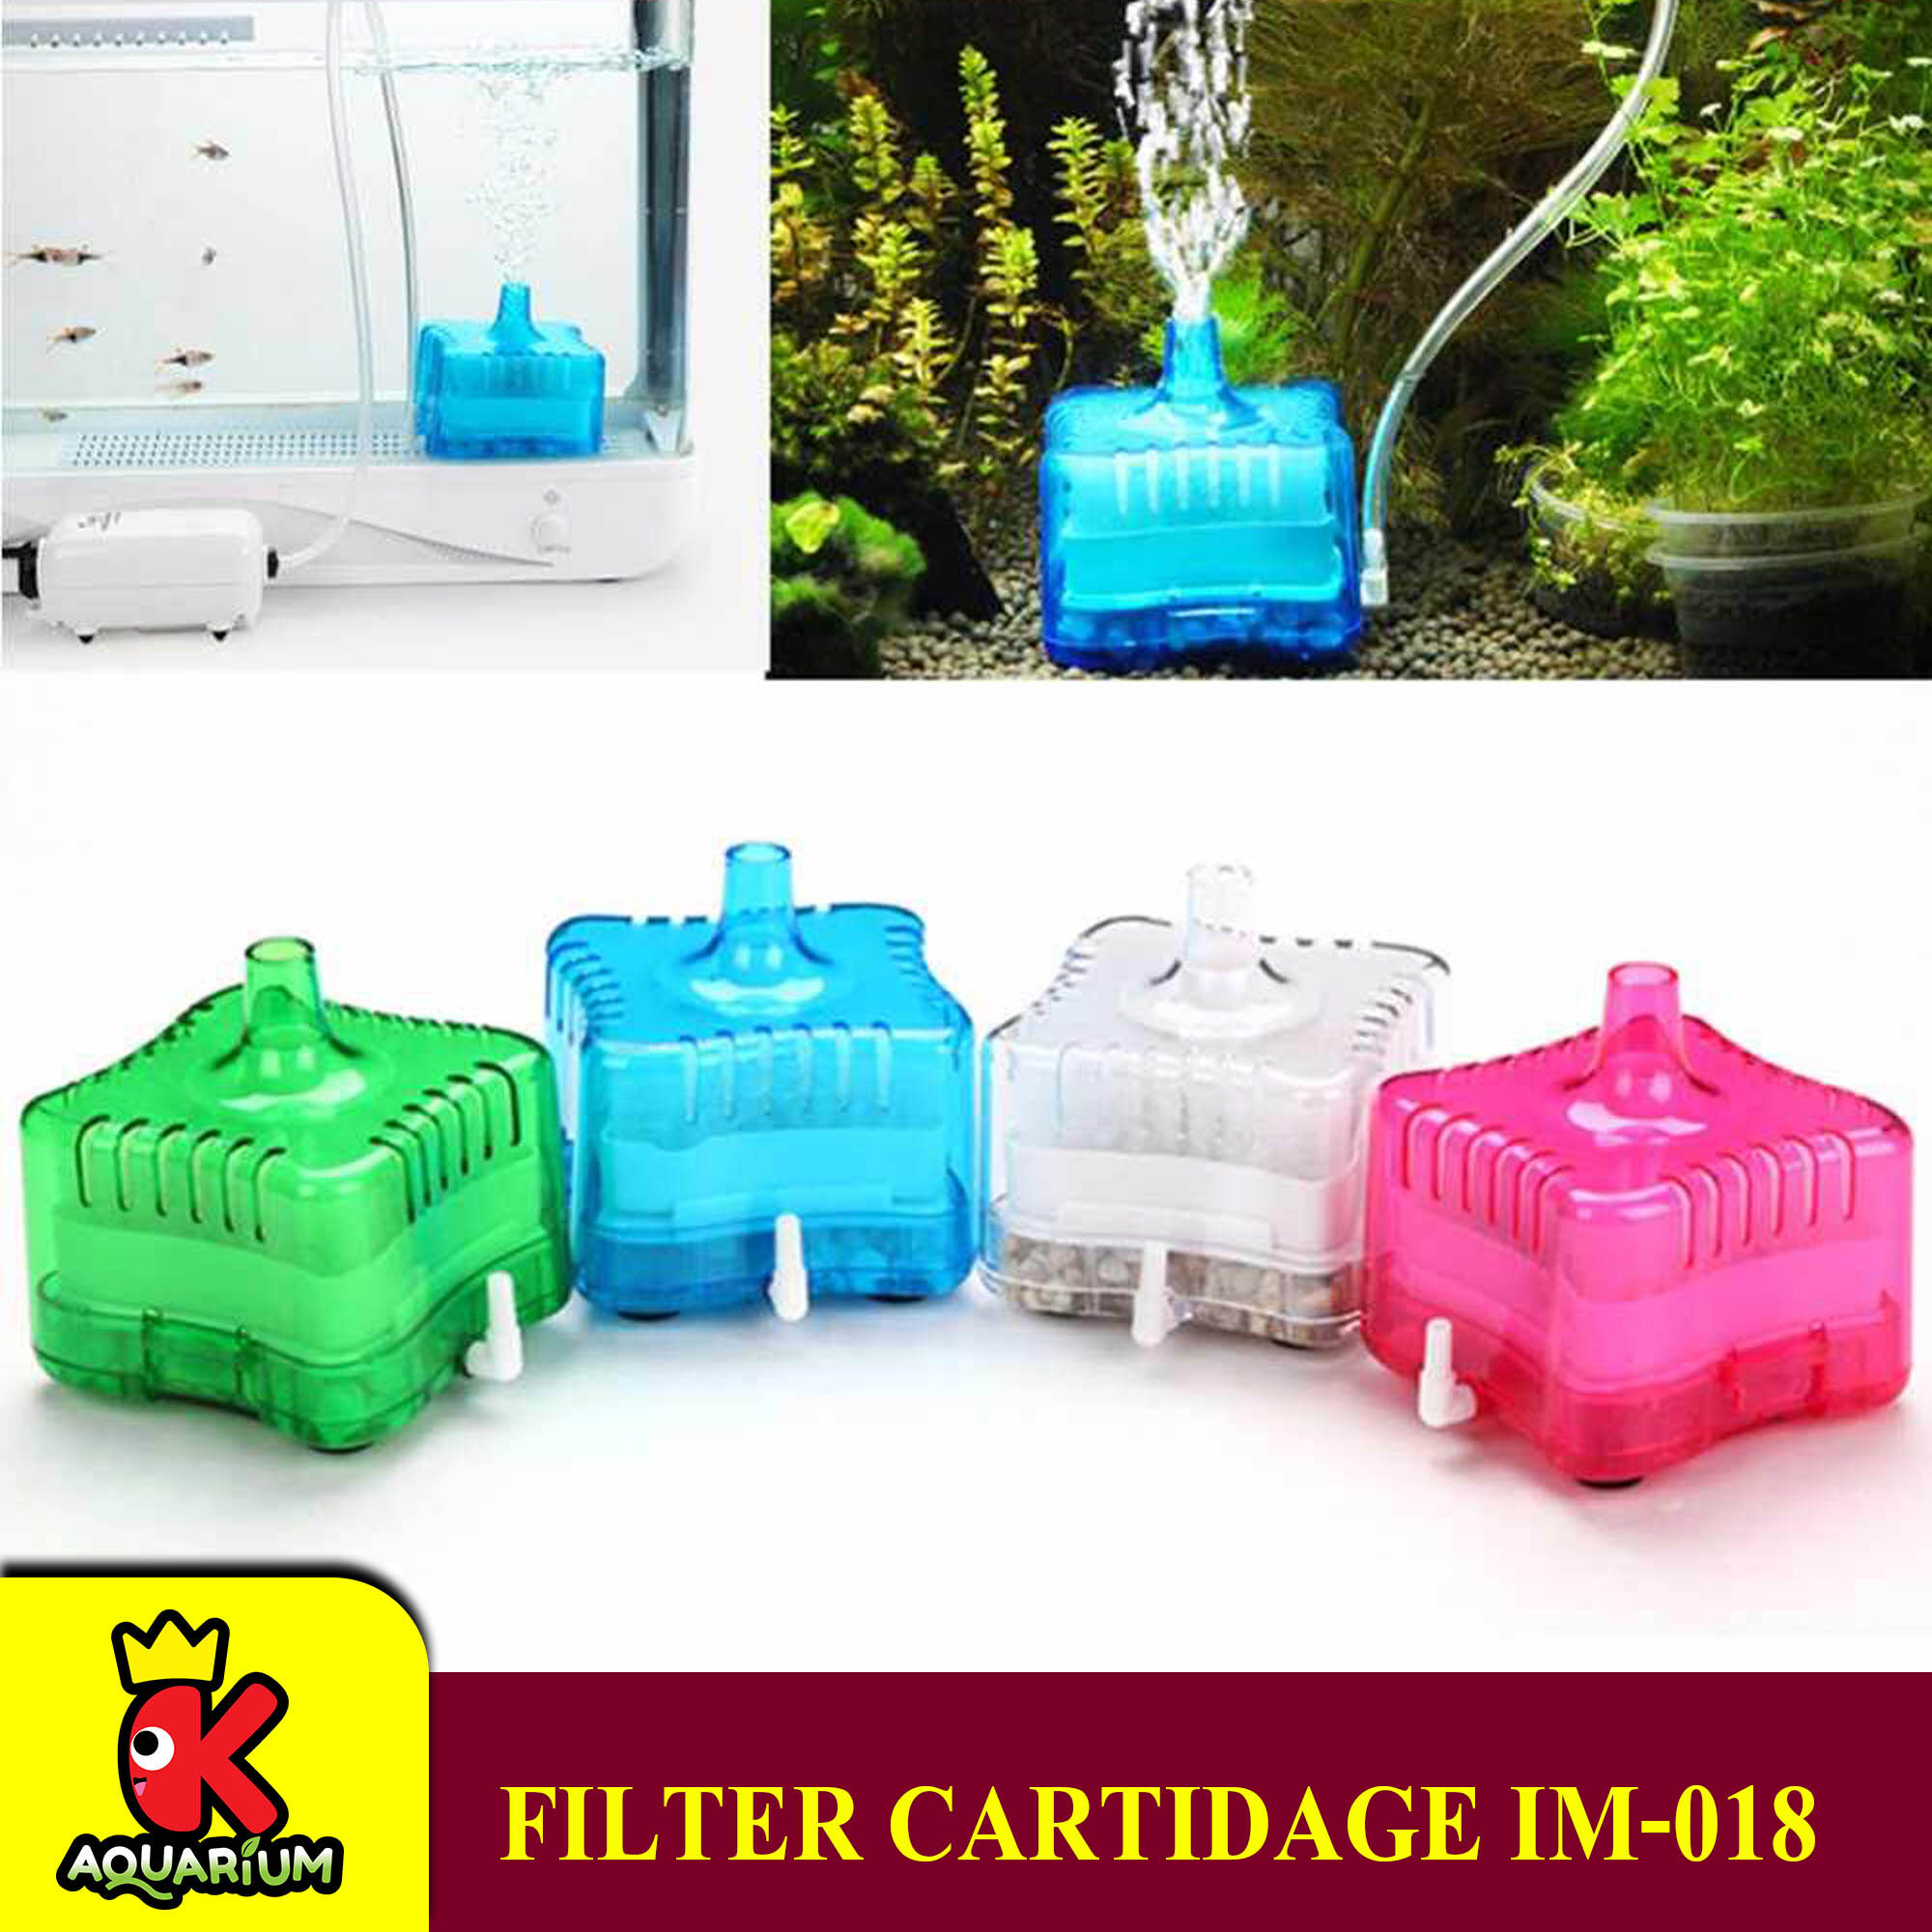 LEECOM Filter Cartridge IM-018 (กล่องกรองน้ำ พร้อมใยกรอง และคาร์บอน ดูดซับสารพิษ ของเสีย น้ำใสสะอาดยาวนานขึ้น)